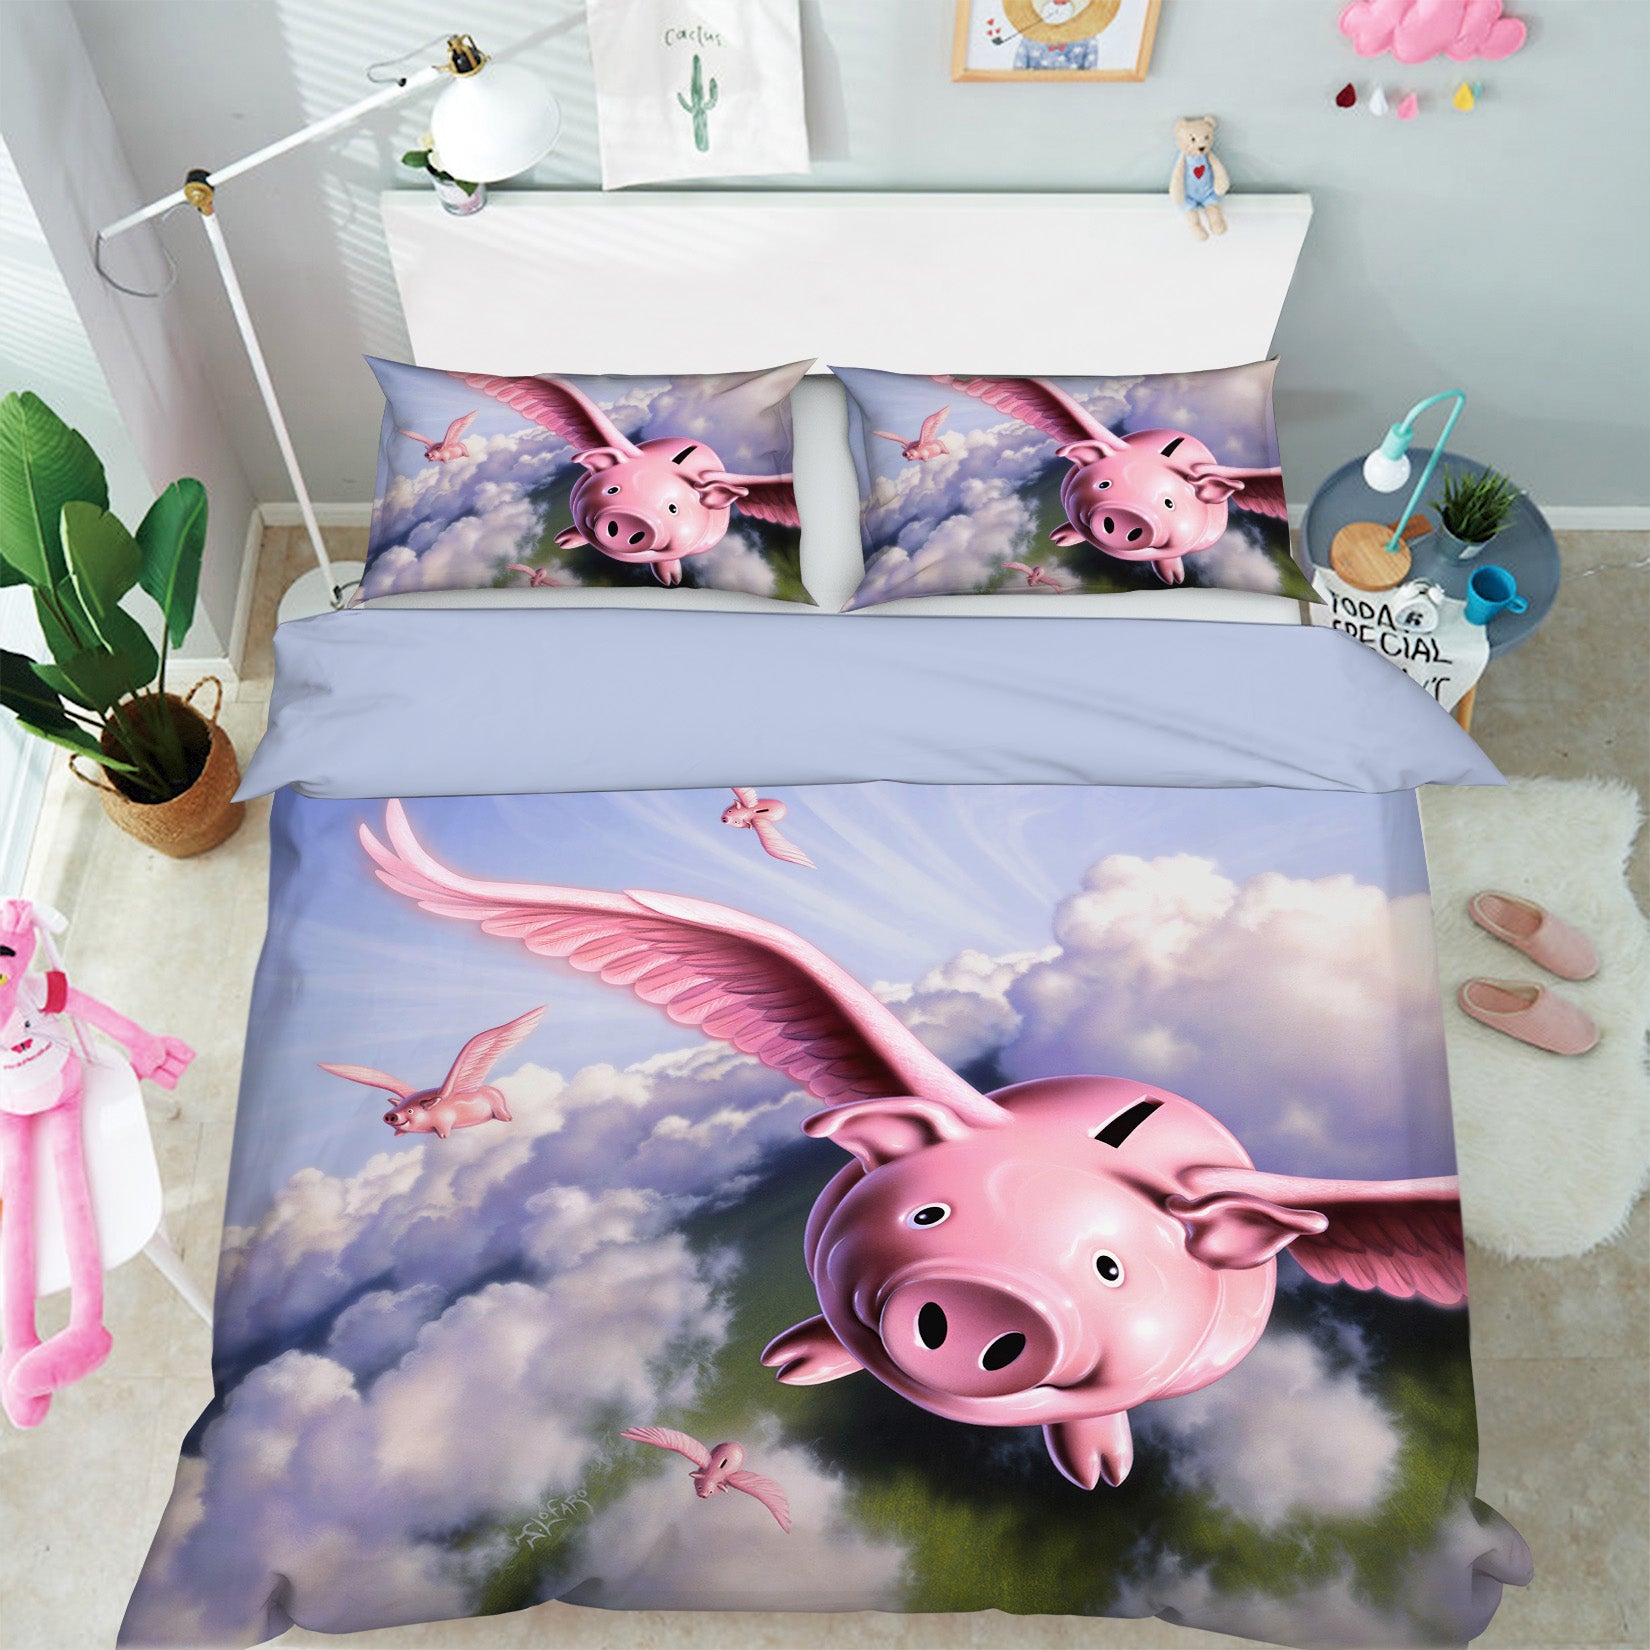 3D Piggies 2107 Jerry LoFaro bedding Bed Pillowcases Quilt